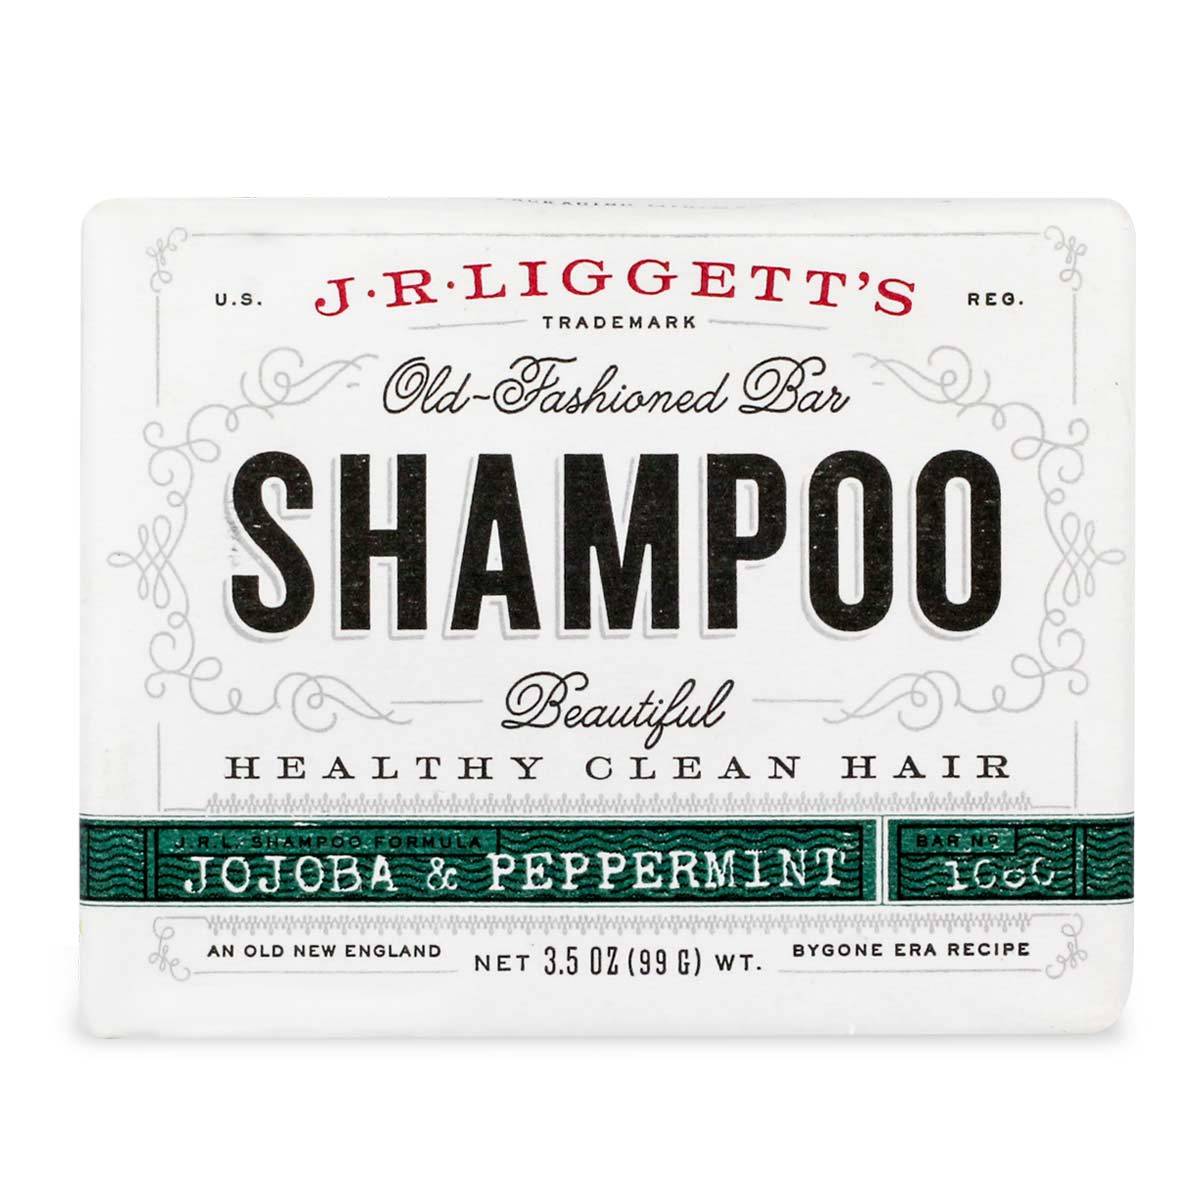 Primary image of Jojoba & Peppermint Bar Shampoo